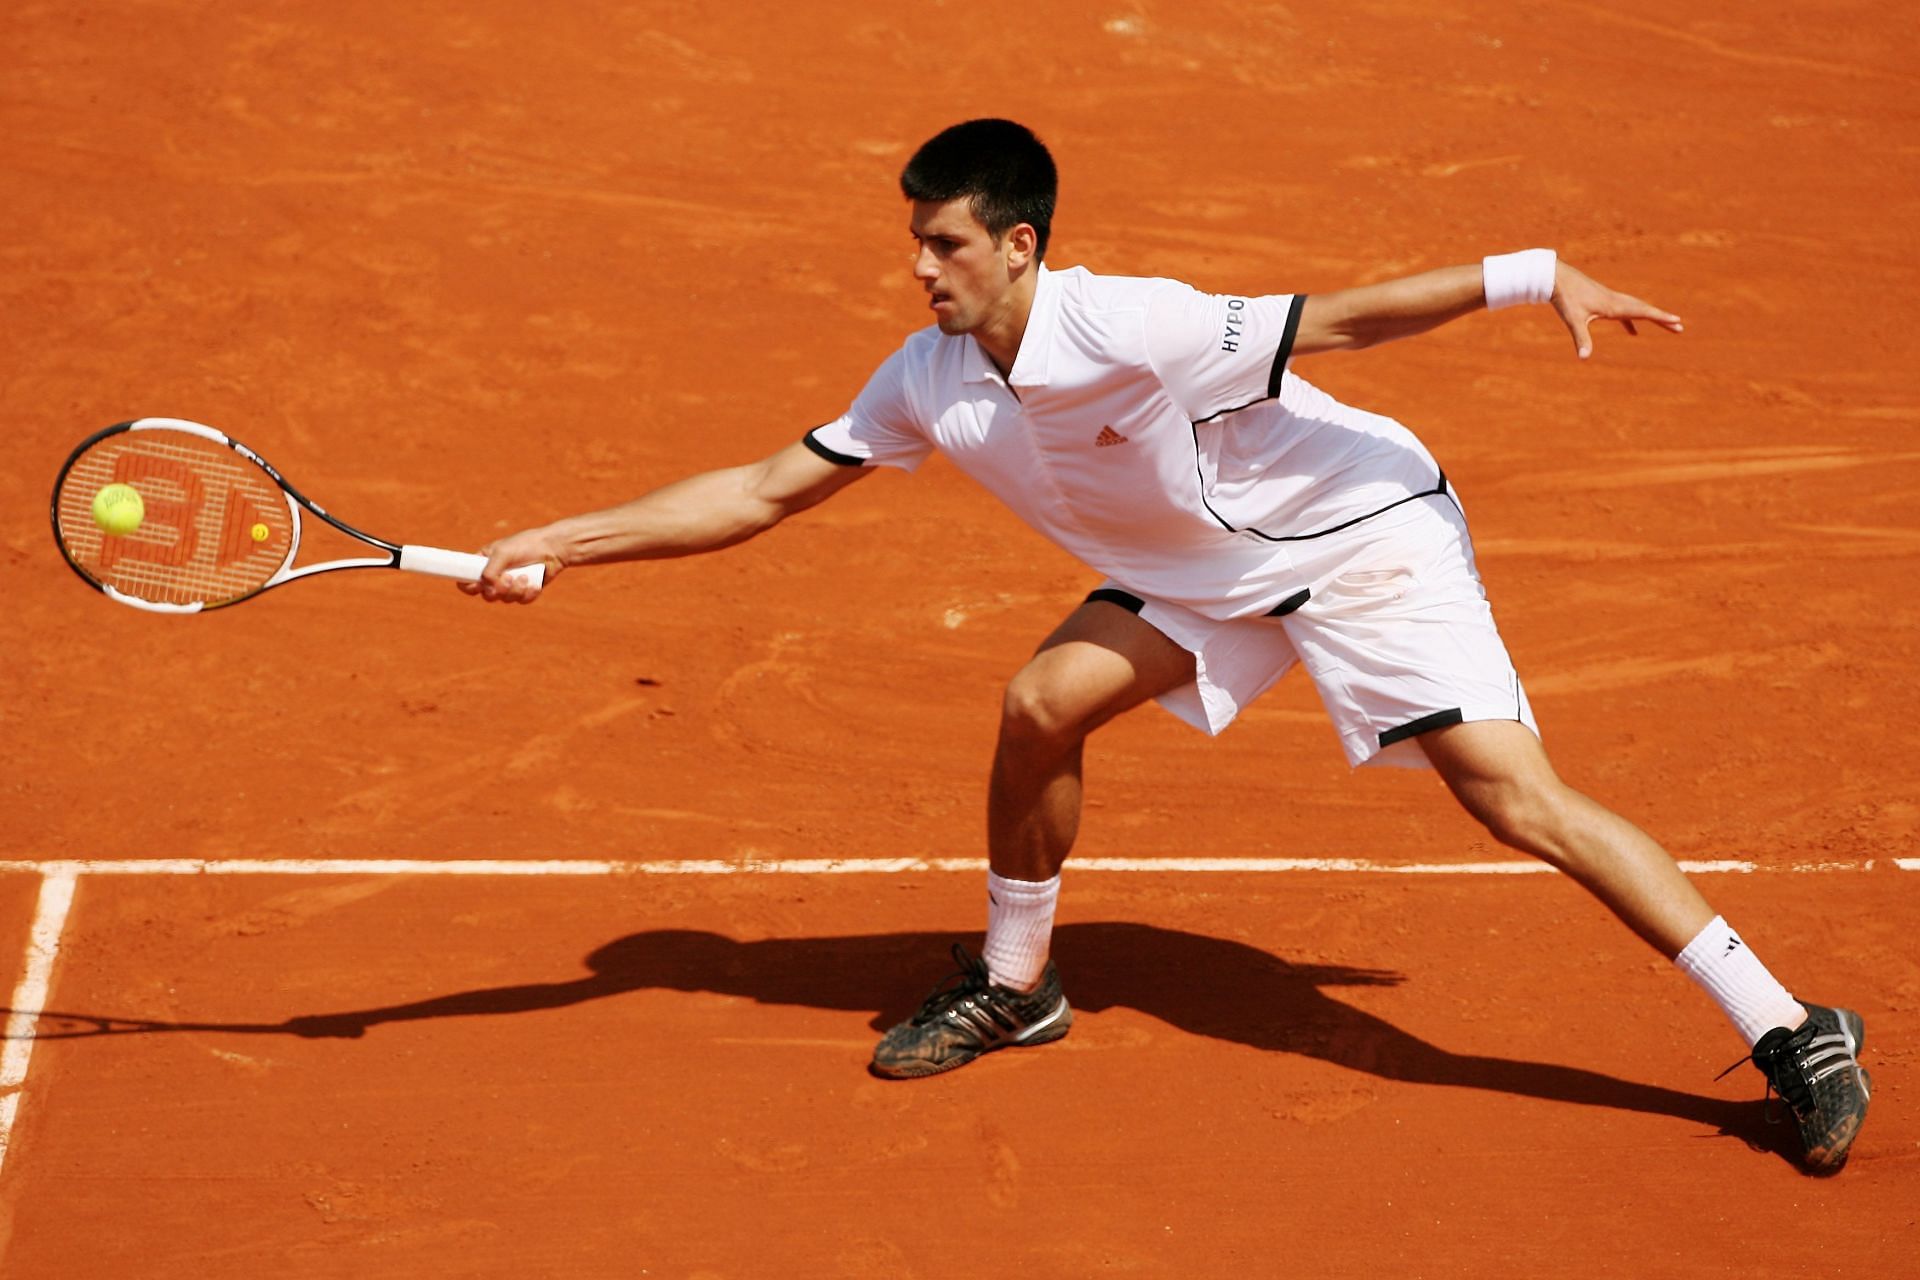 Novak Djokovic won 2007 Estoril despite being bagelled in the final